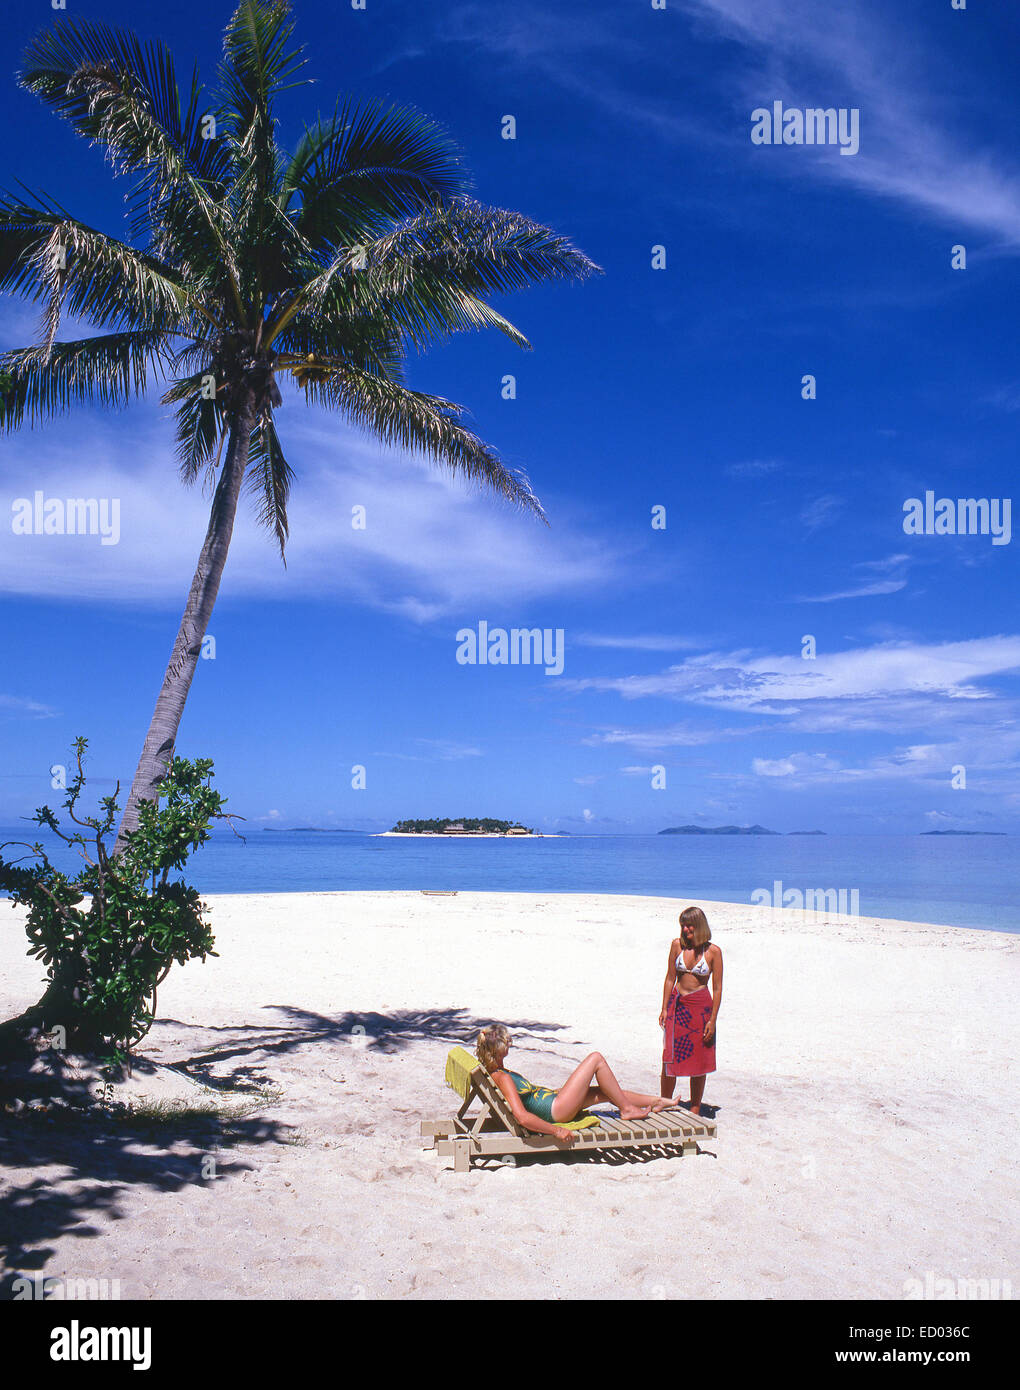 Junge Frauen am tropischen Strand, Beachcomber Island Resort, Beachcomber Island, Mamanuca Inseln, Viti Levu, Republik Fidschi-Inseln Stockfoto